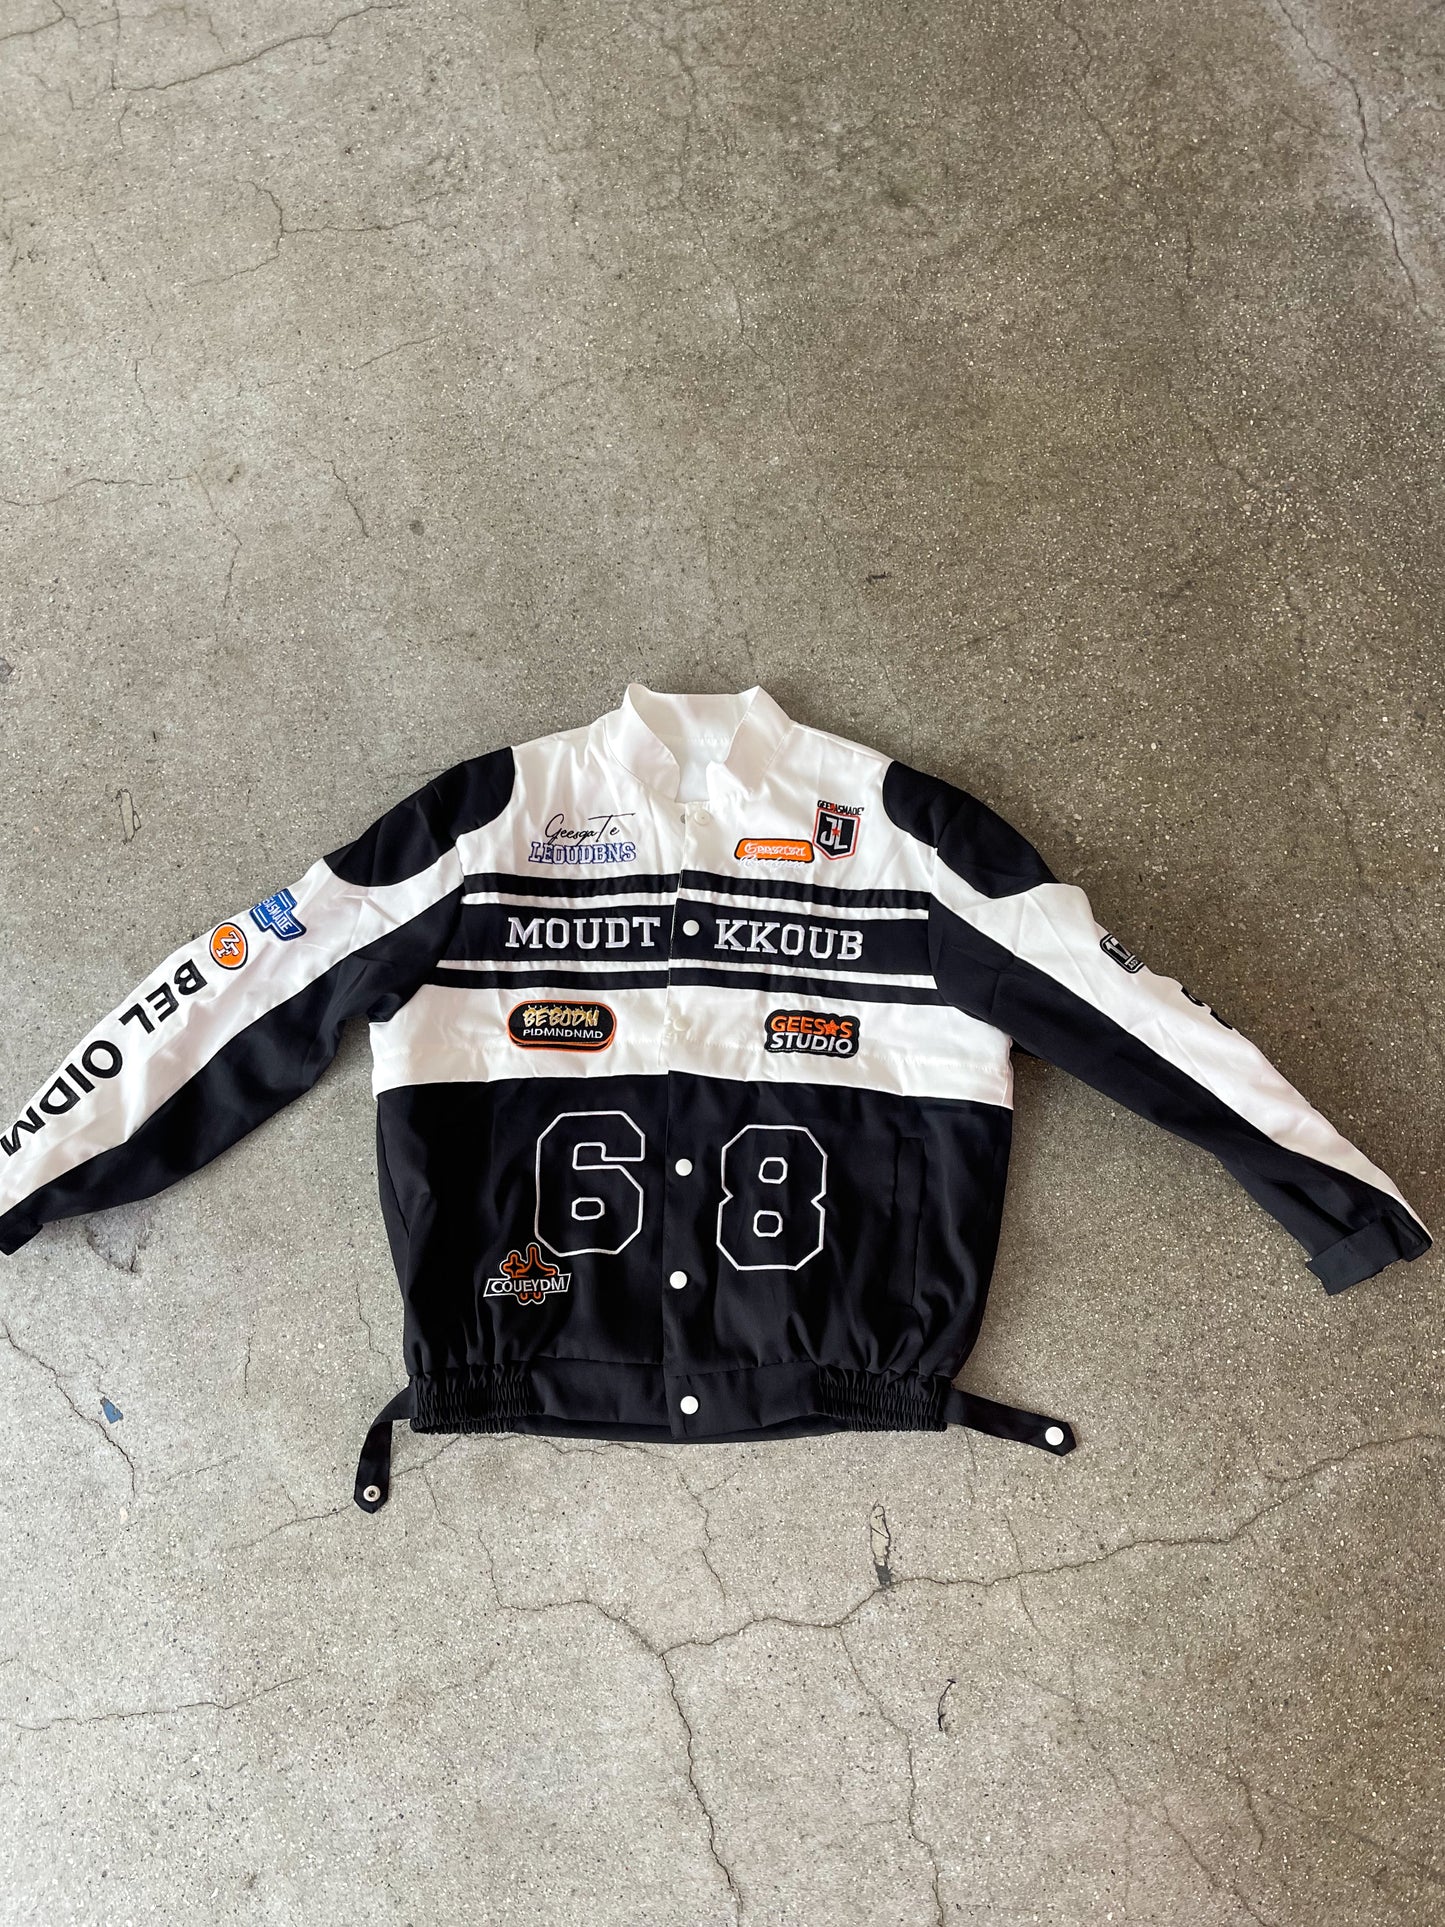 Moto Mami racer jacket - detachable